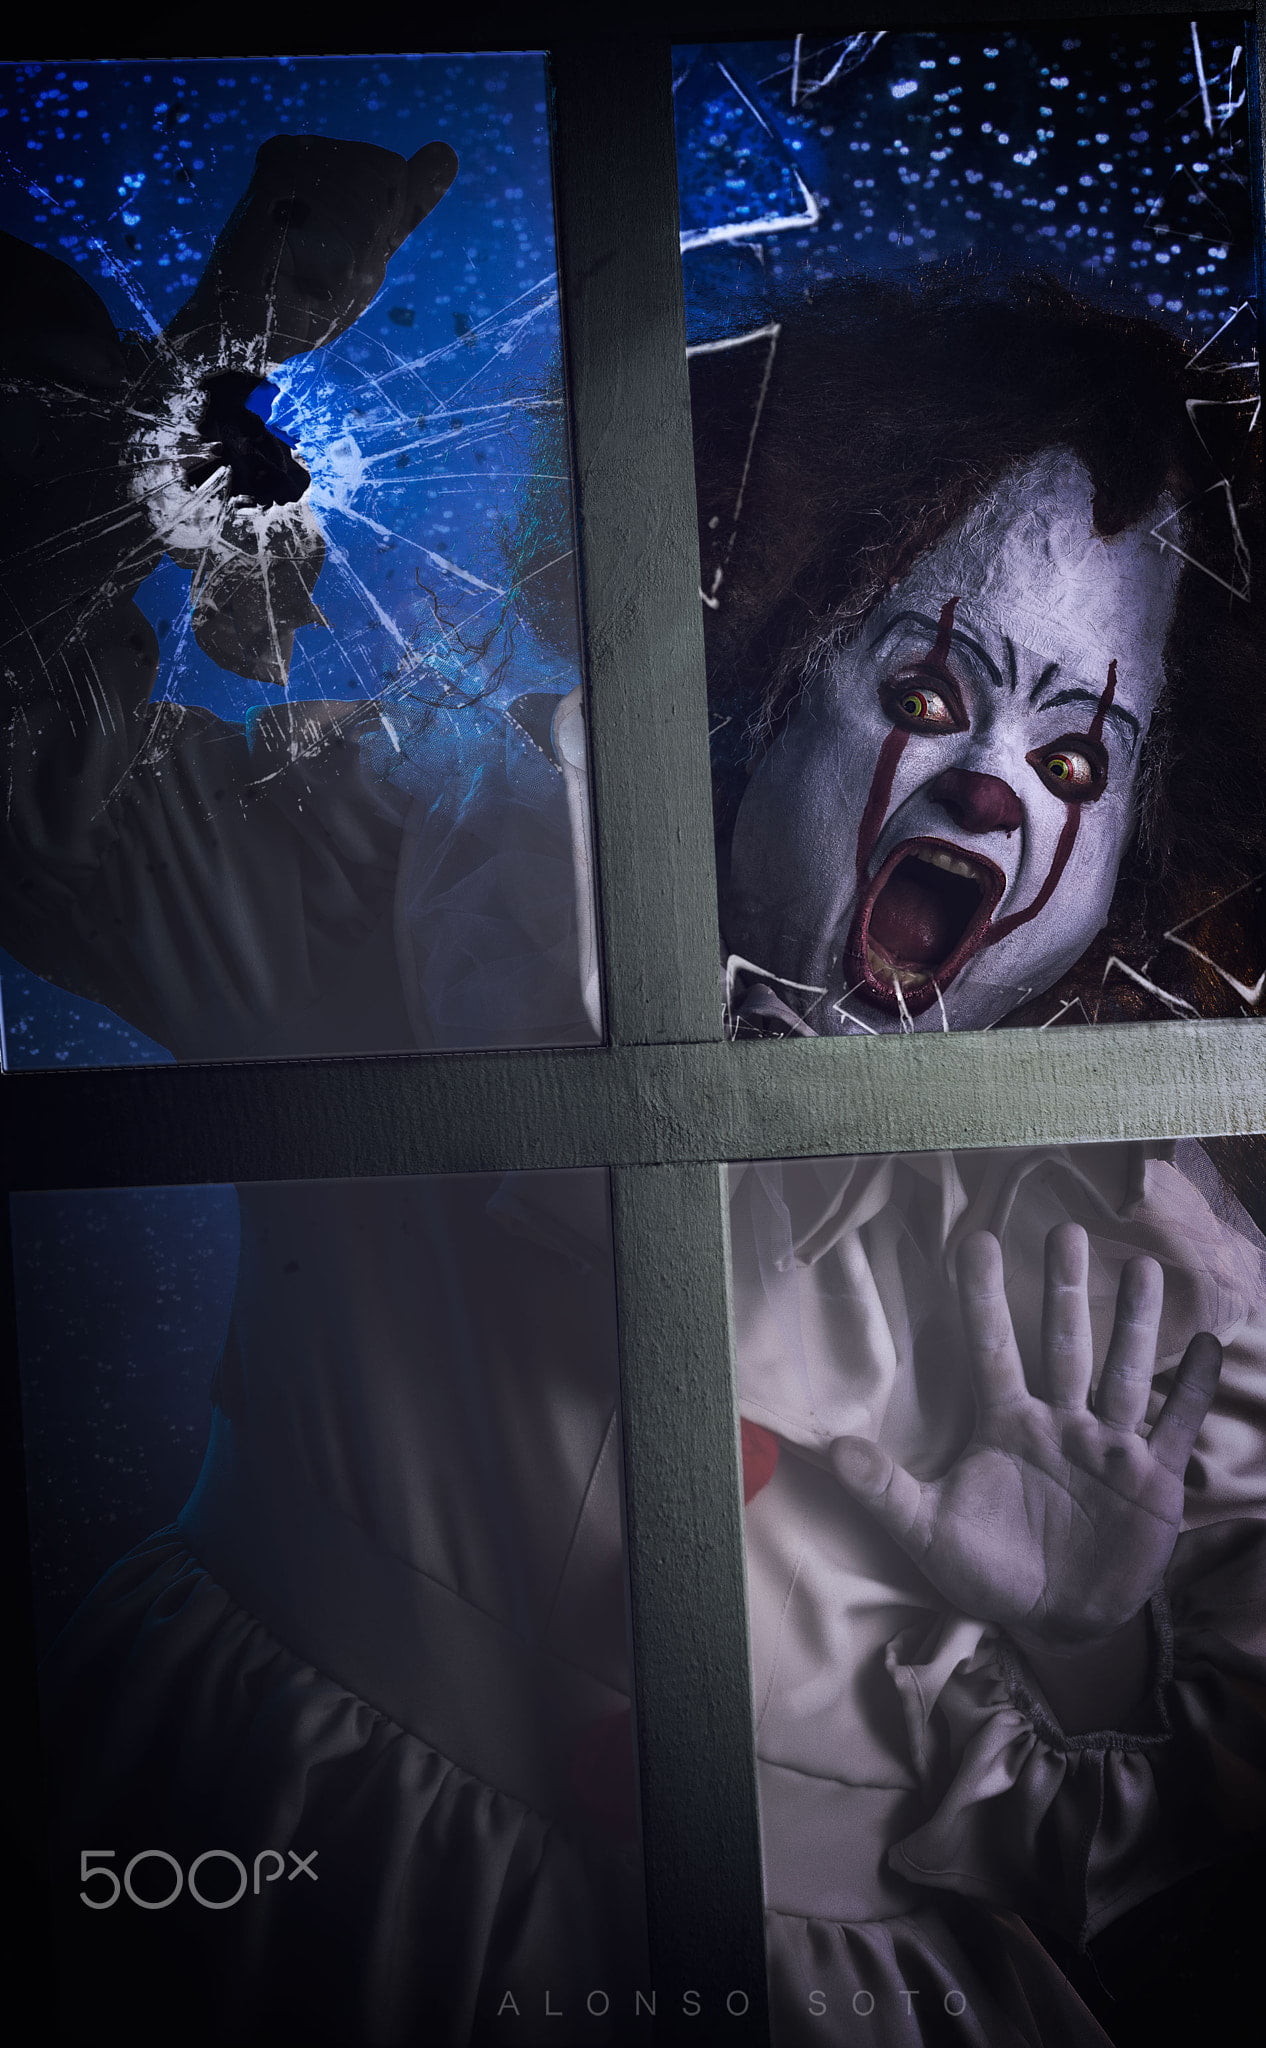 clowns, Alonso Soto, 500px, spooky, fear, emotion, adult, horror